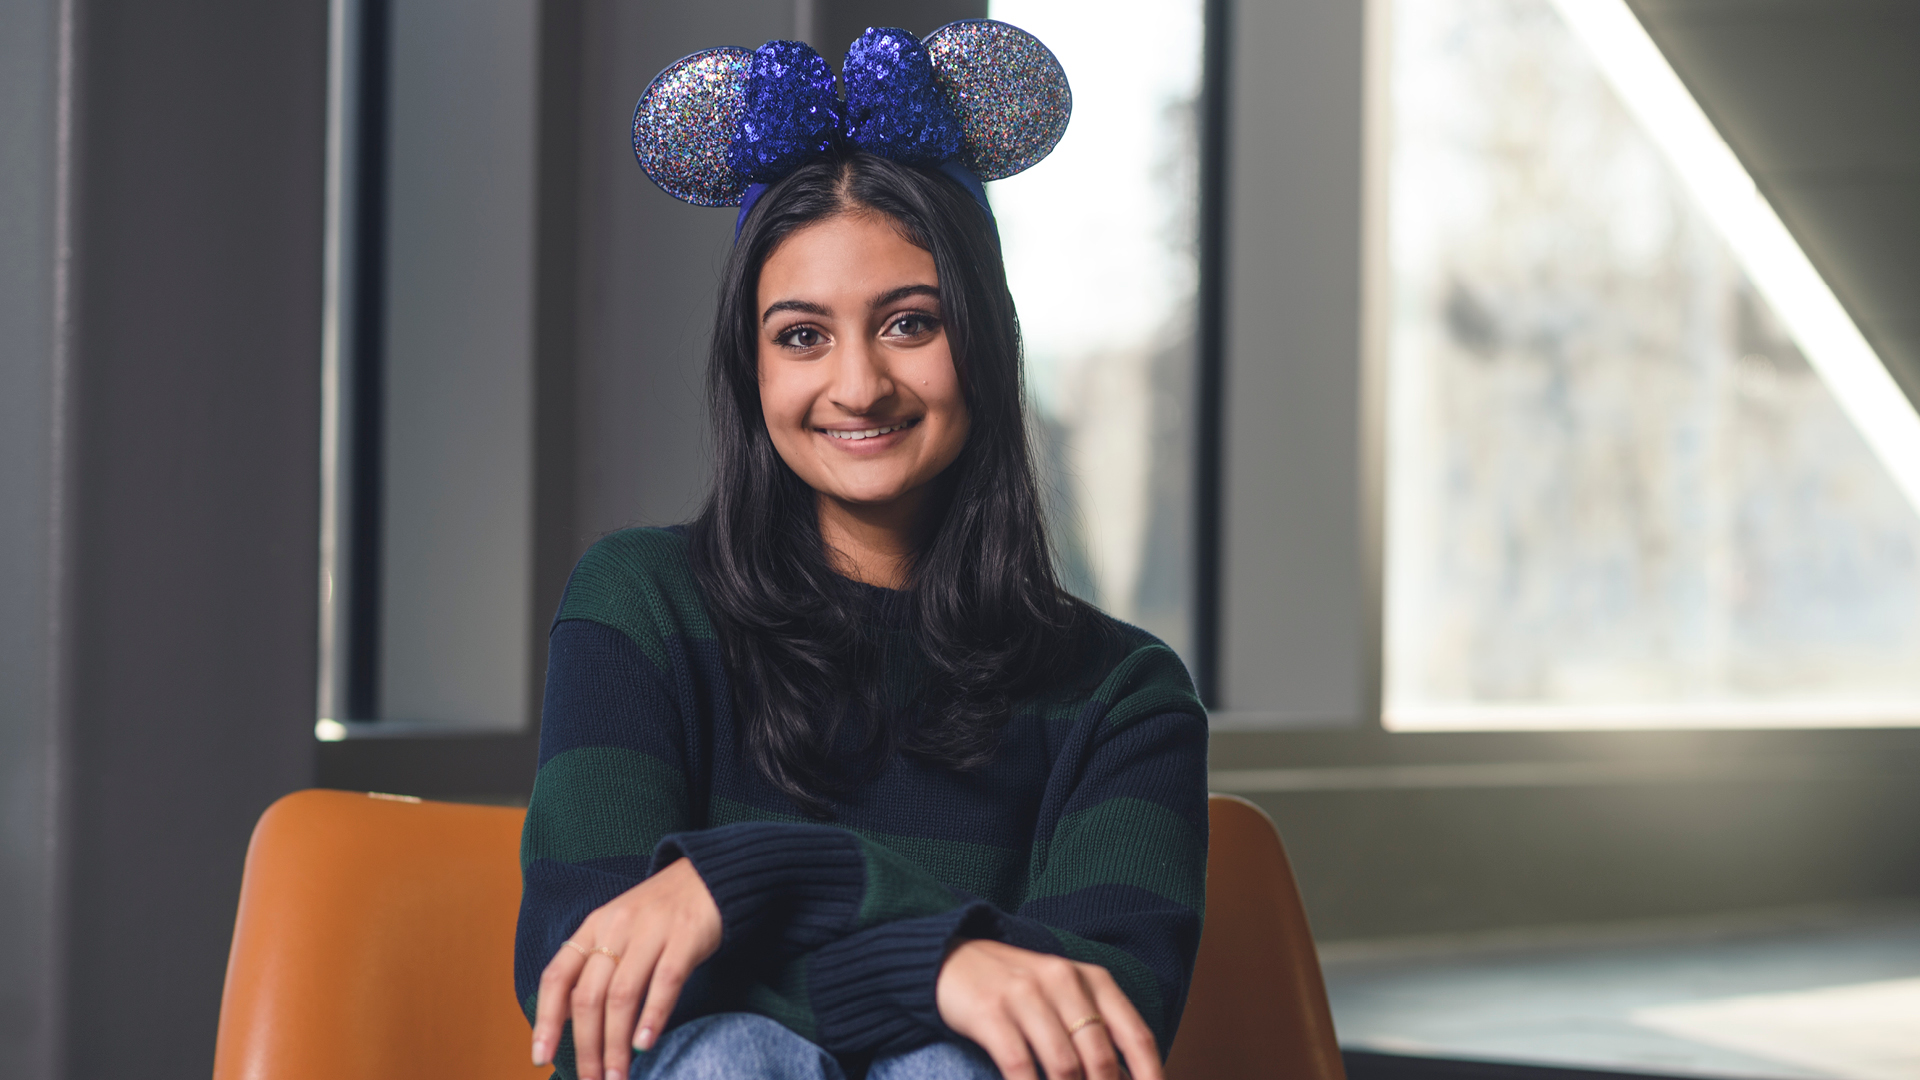 Niyati Sriram is a recent graduate of the Purdue University computer science program, and she landed her dream job at Disney Streaming.